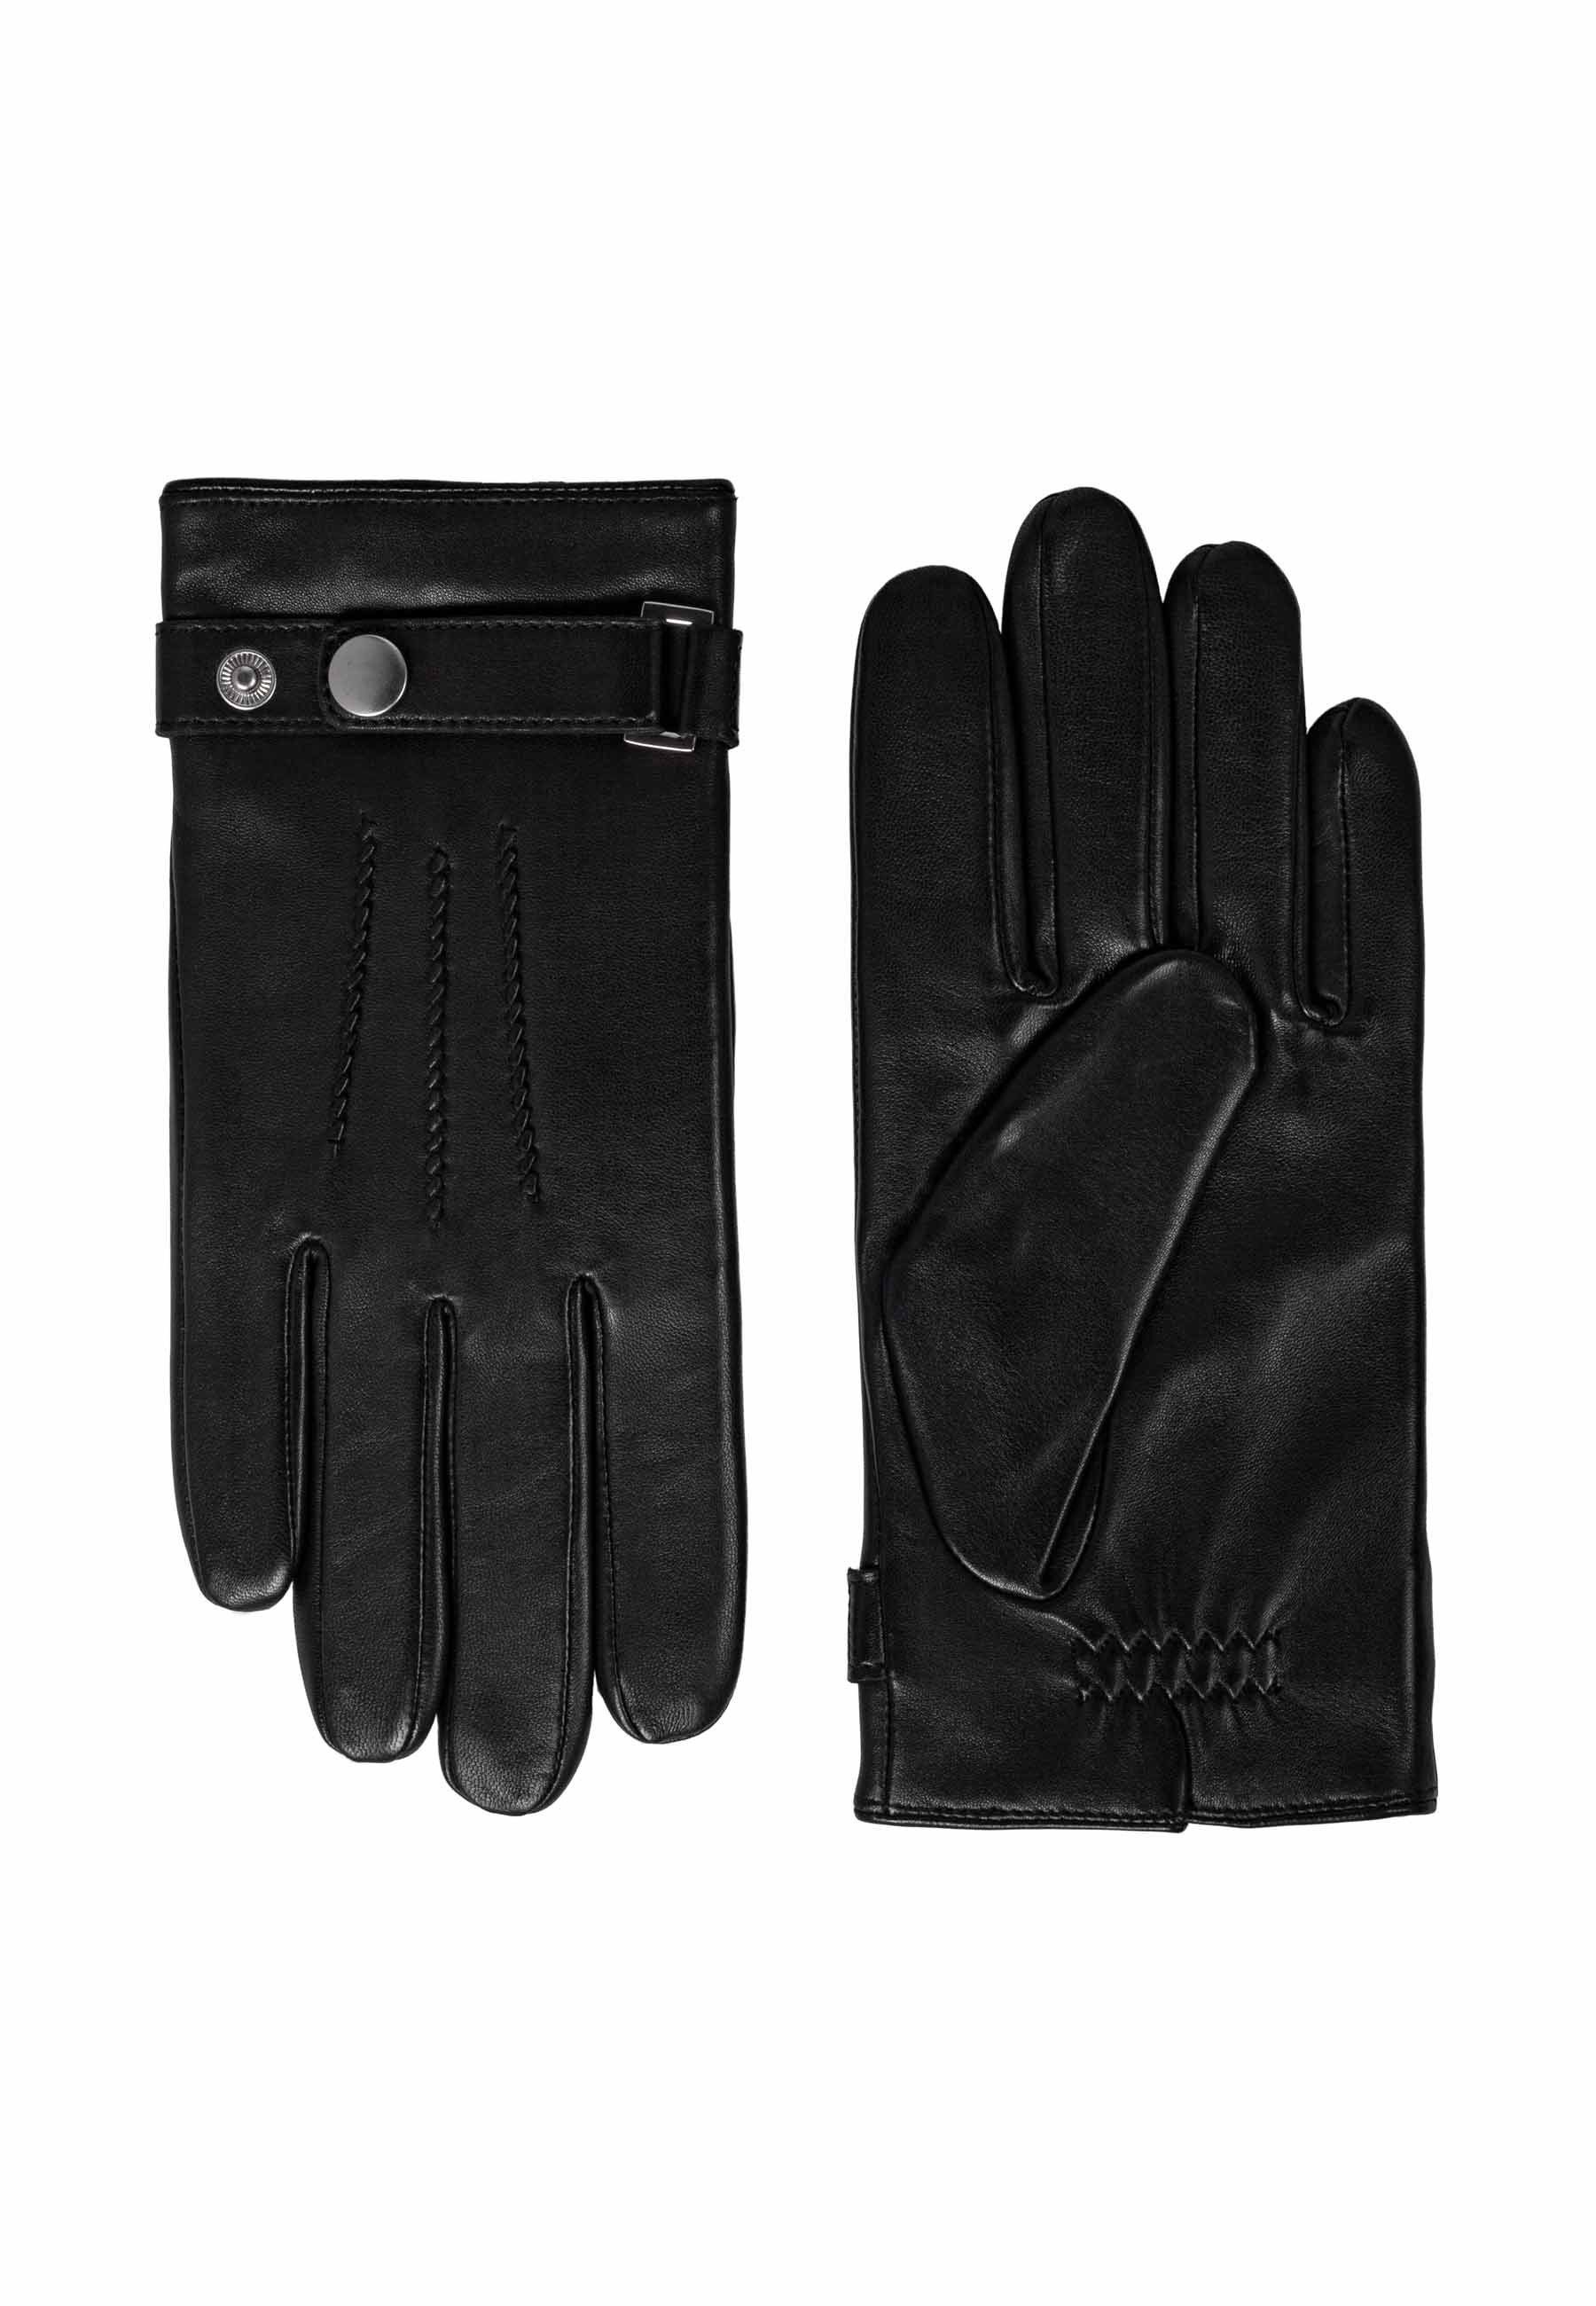 ok Gloves Lederhandschuhe Herrenhandschuh black 001 Diego